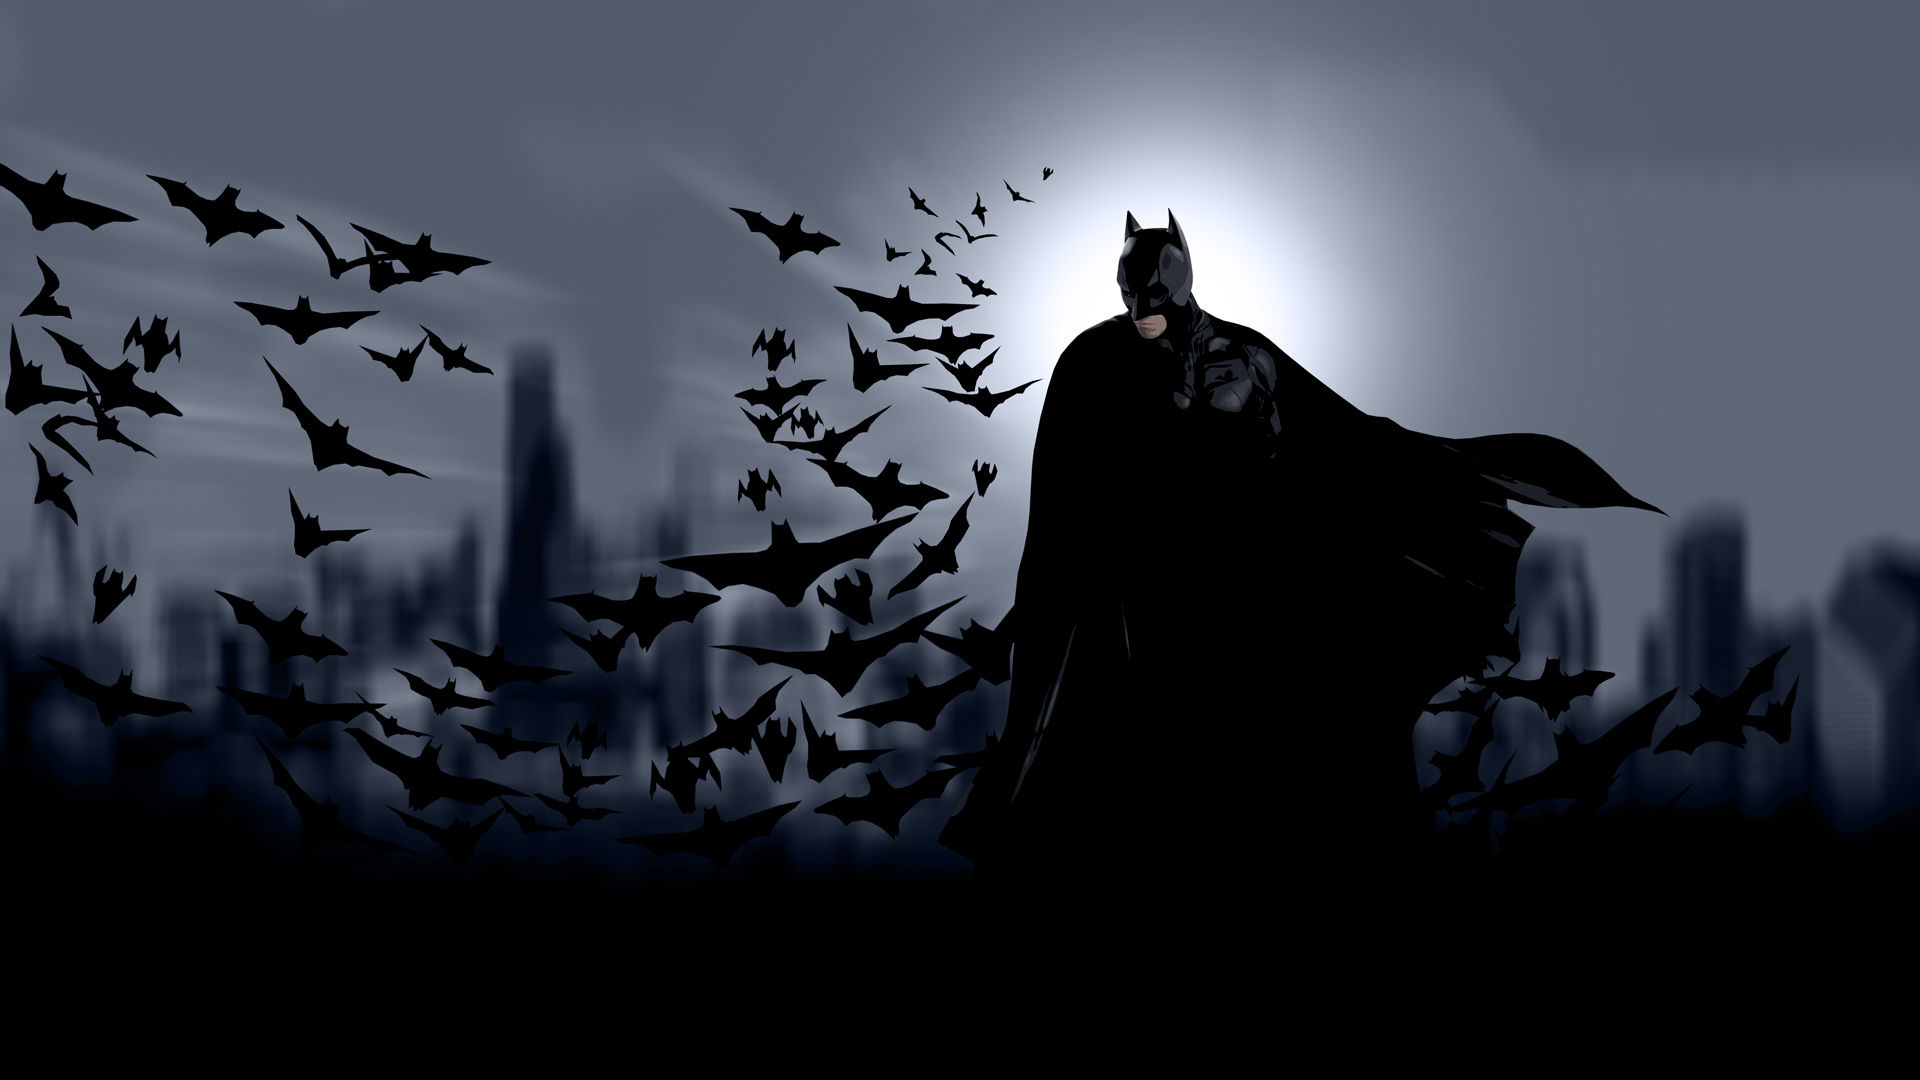 bats and Batman picture background